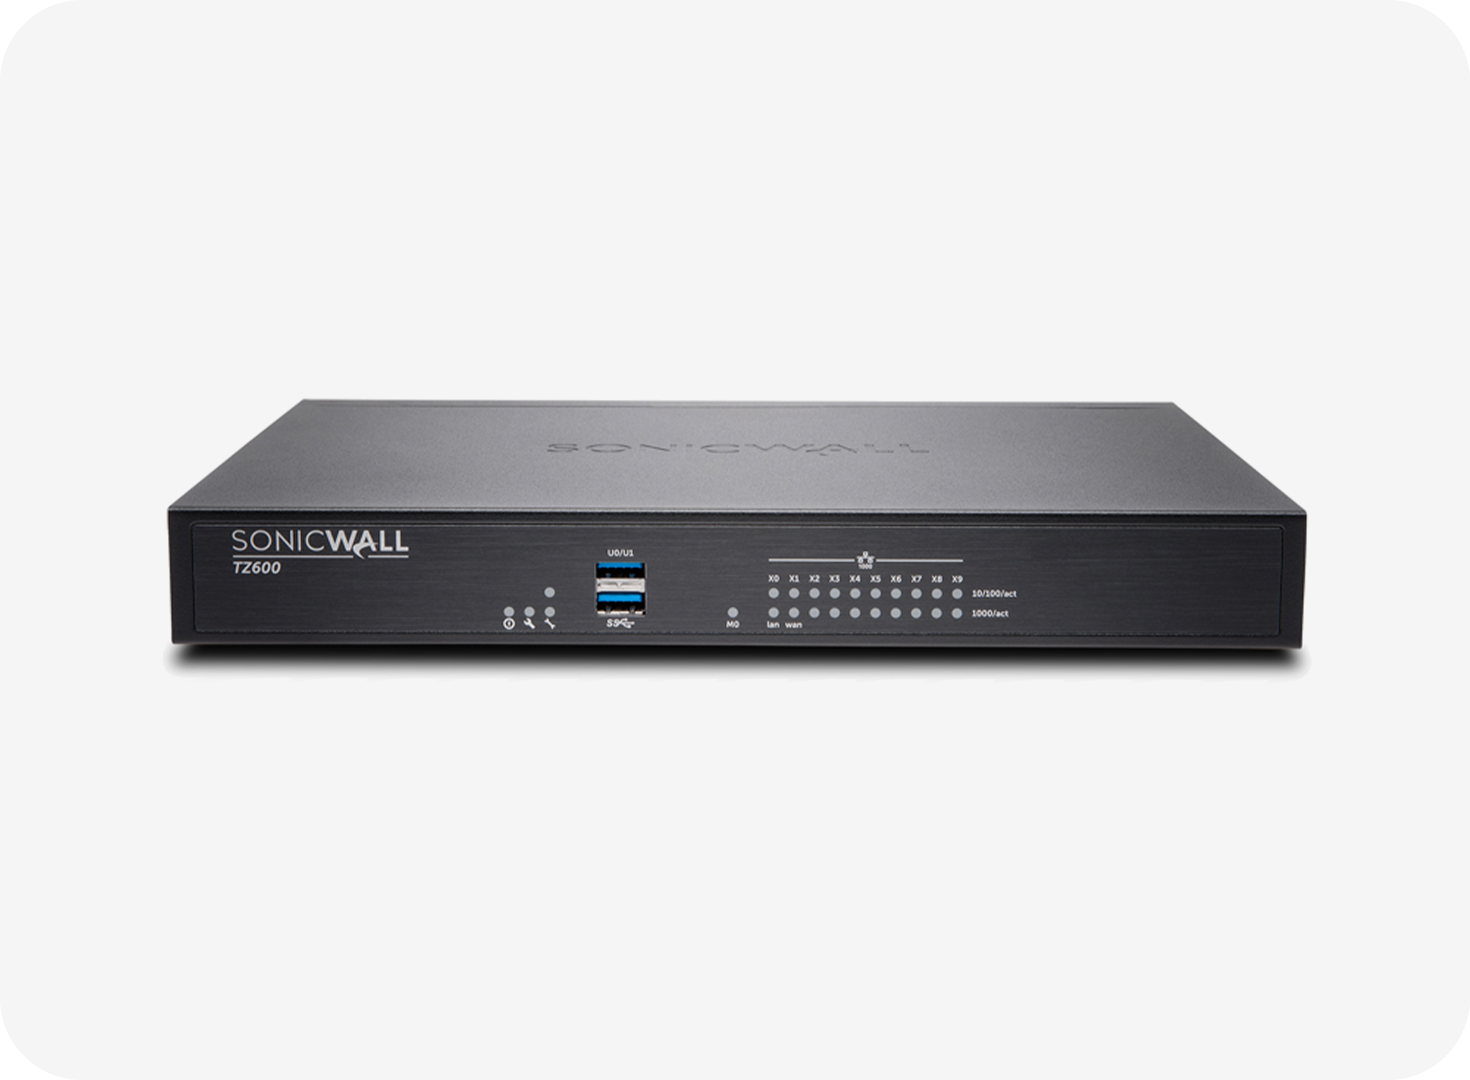 Buy SonicWall TZ670 series Firewall at Best Price in Dubai, Abu Dhabi, UAE